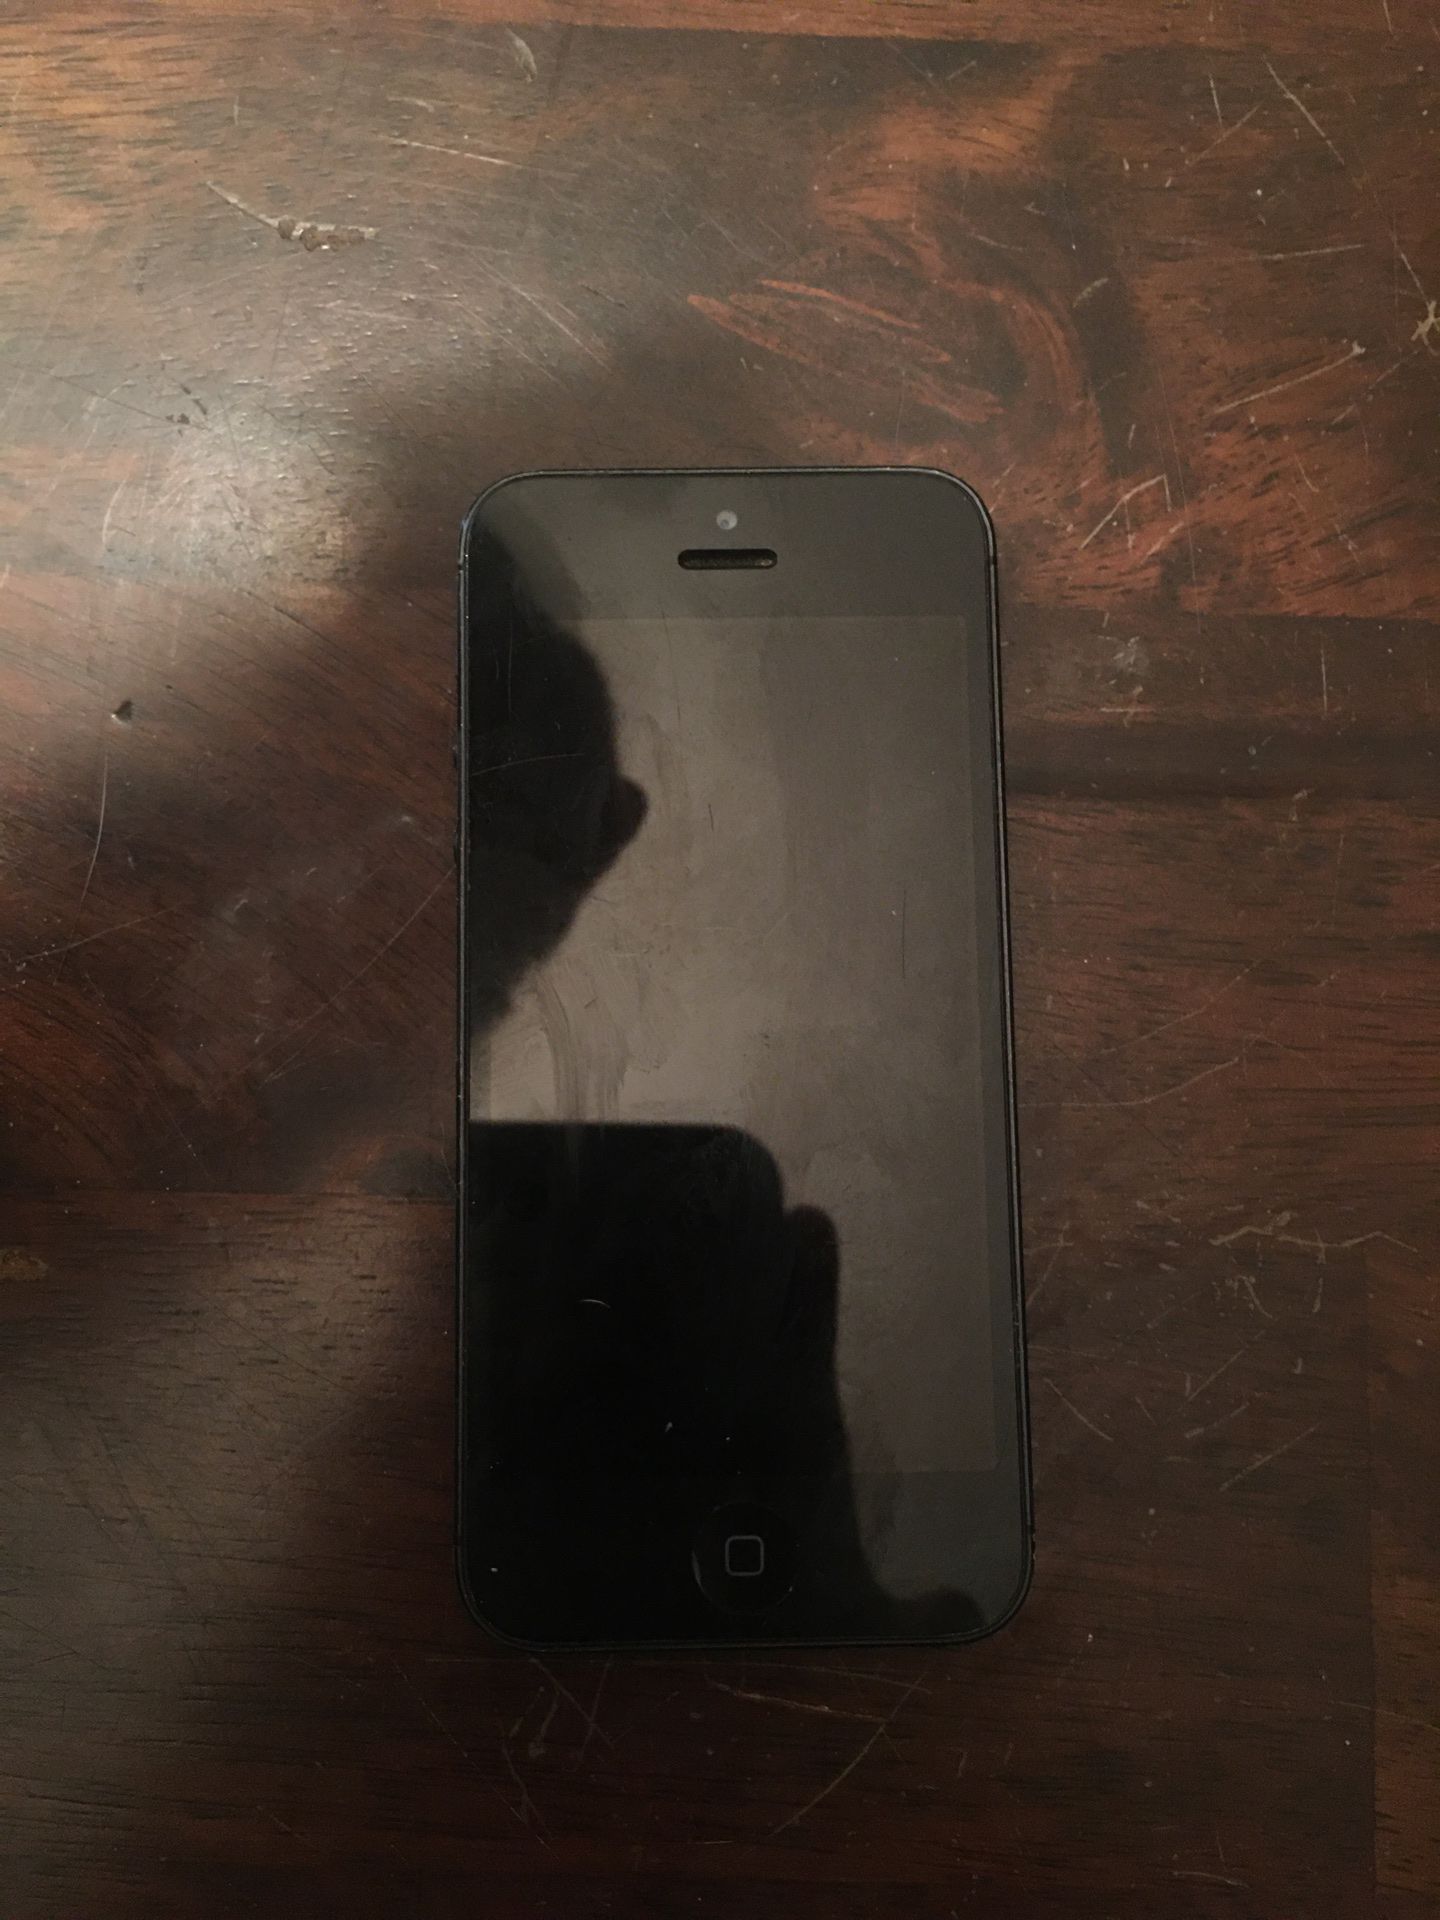 Black IPhone 5 (UNLOCKED)